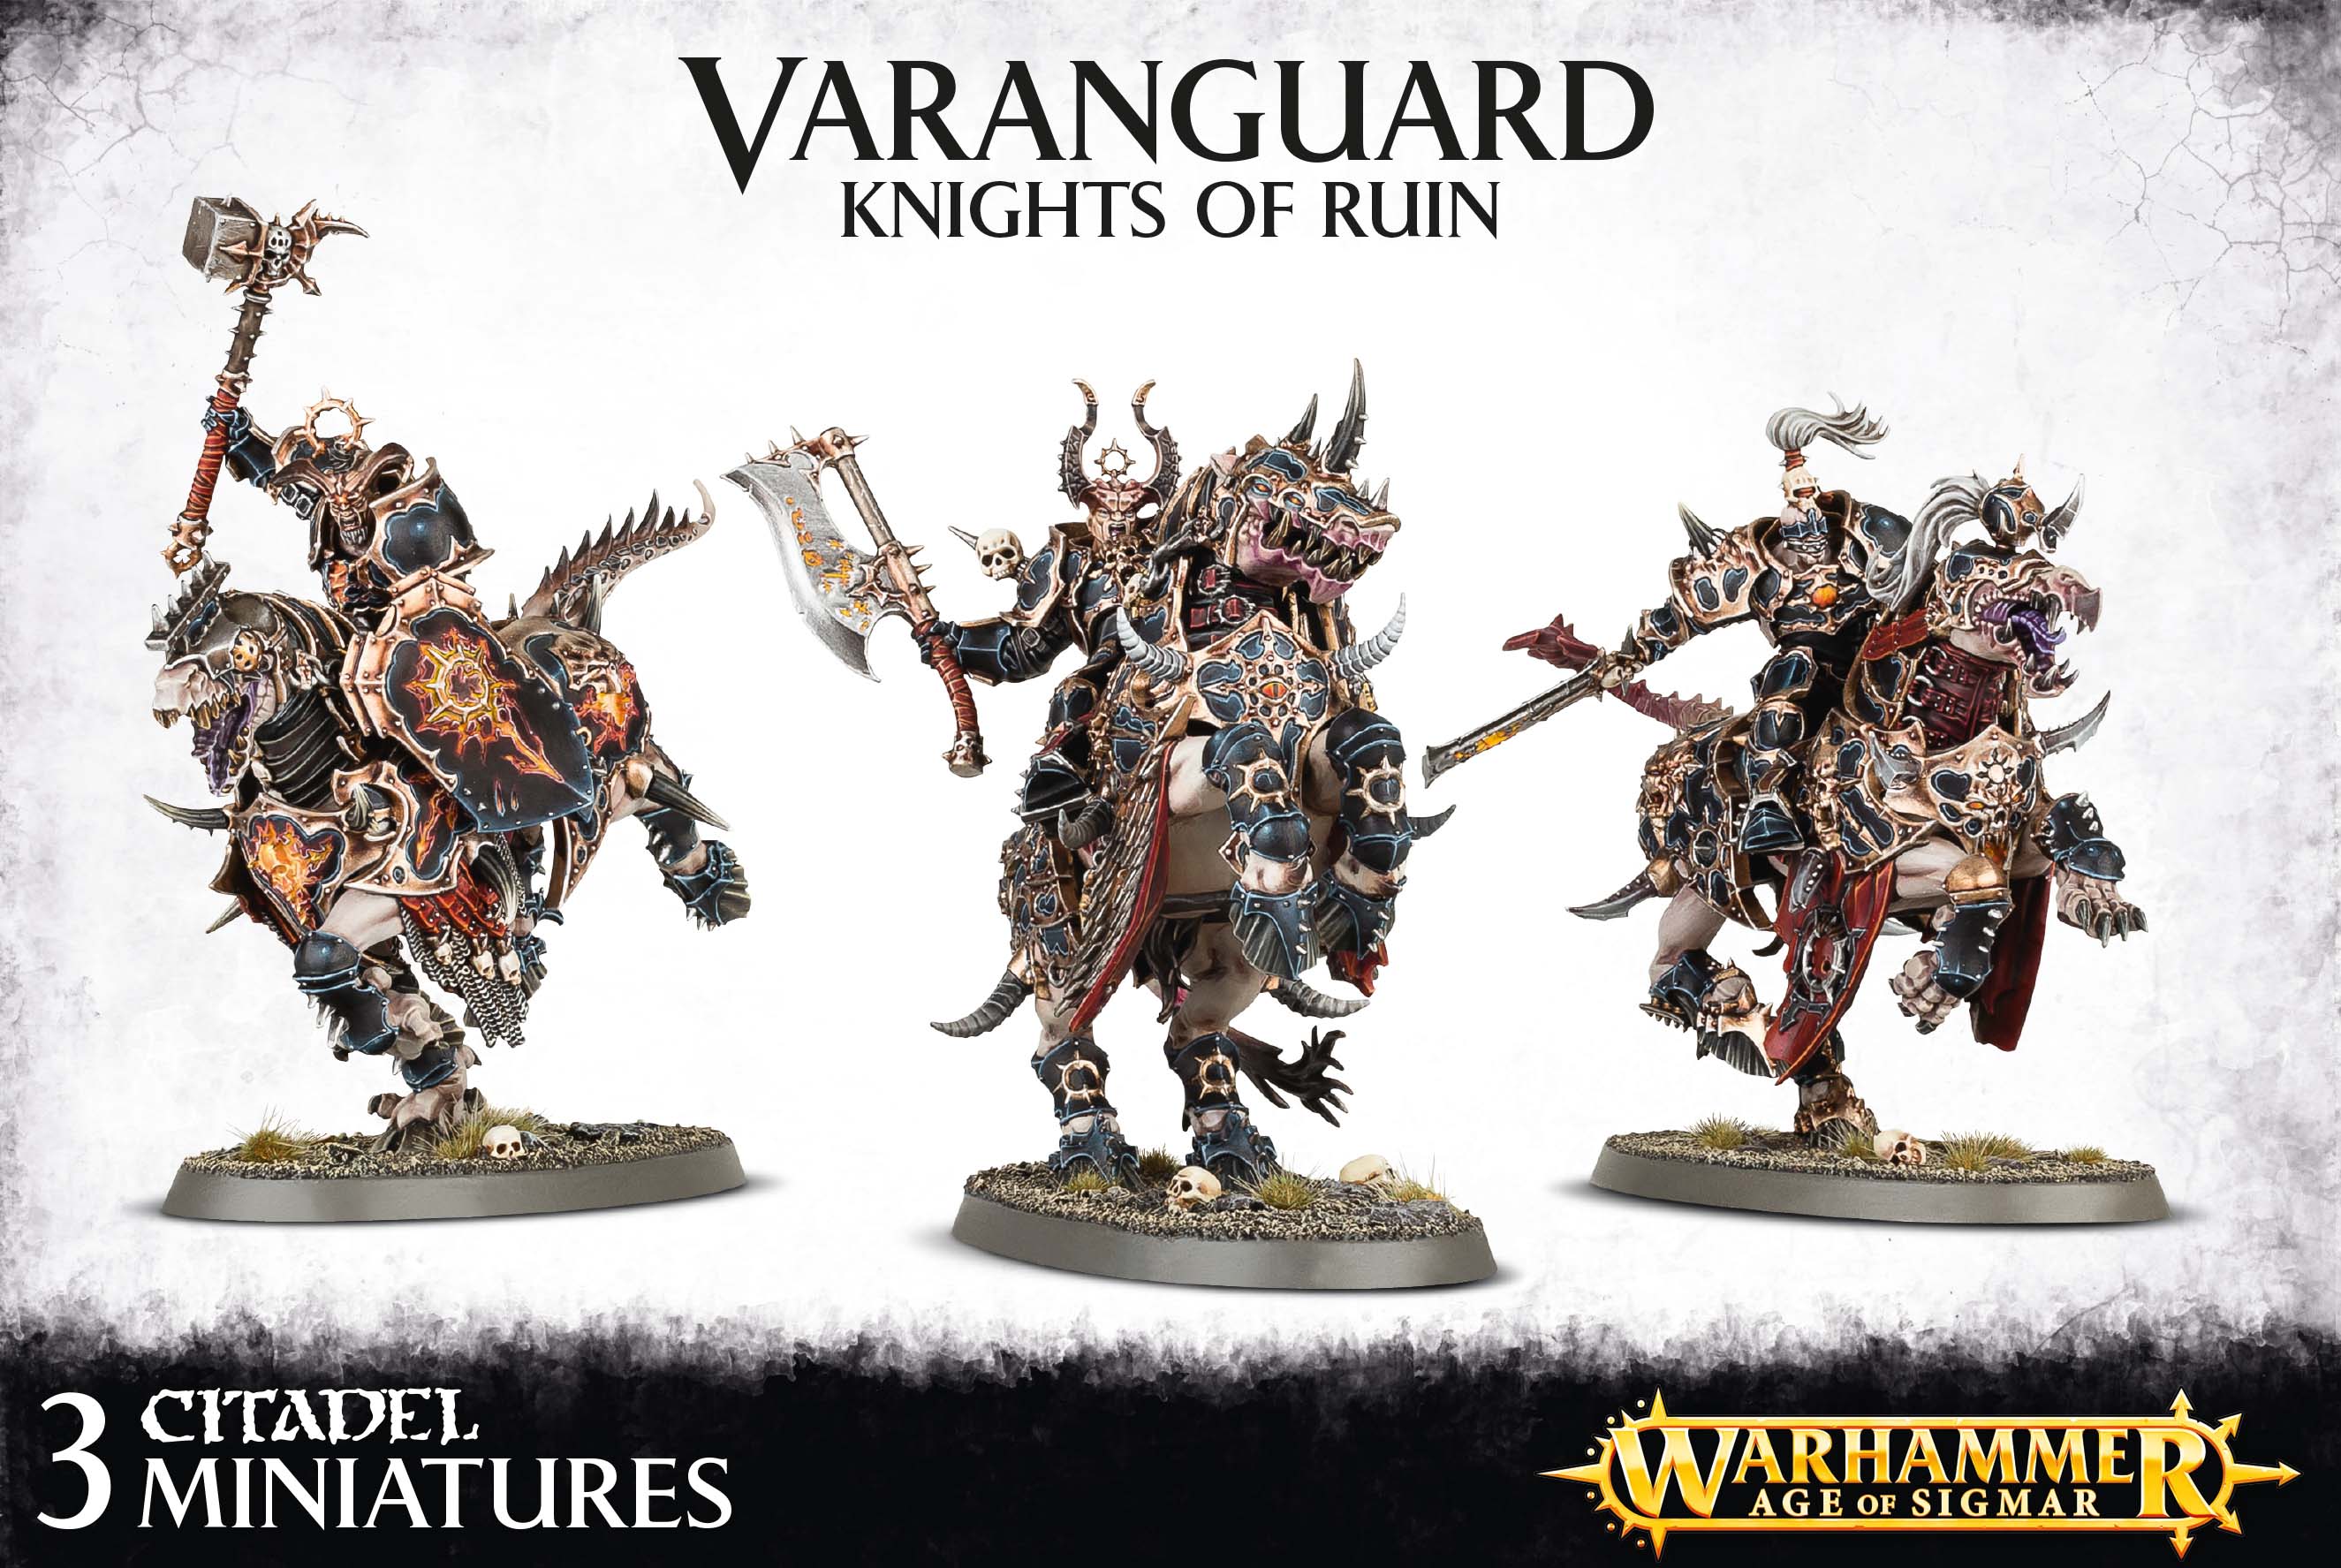 Varanguard Knights of Ruin